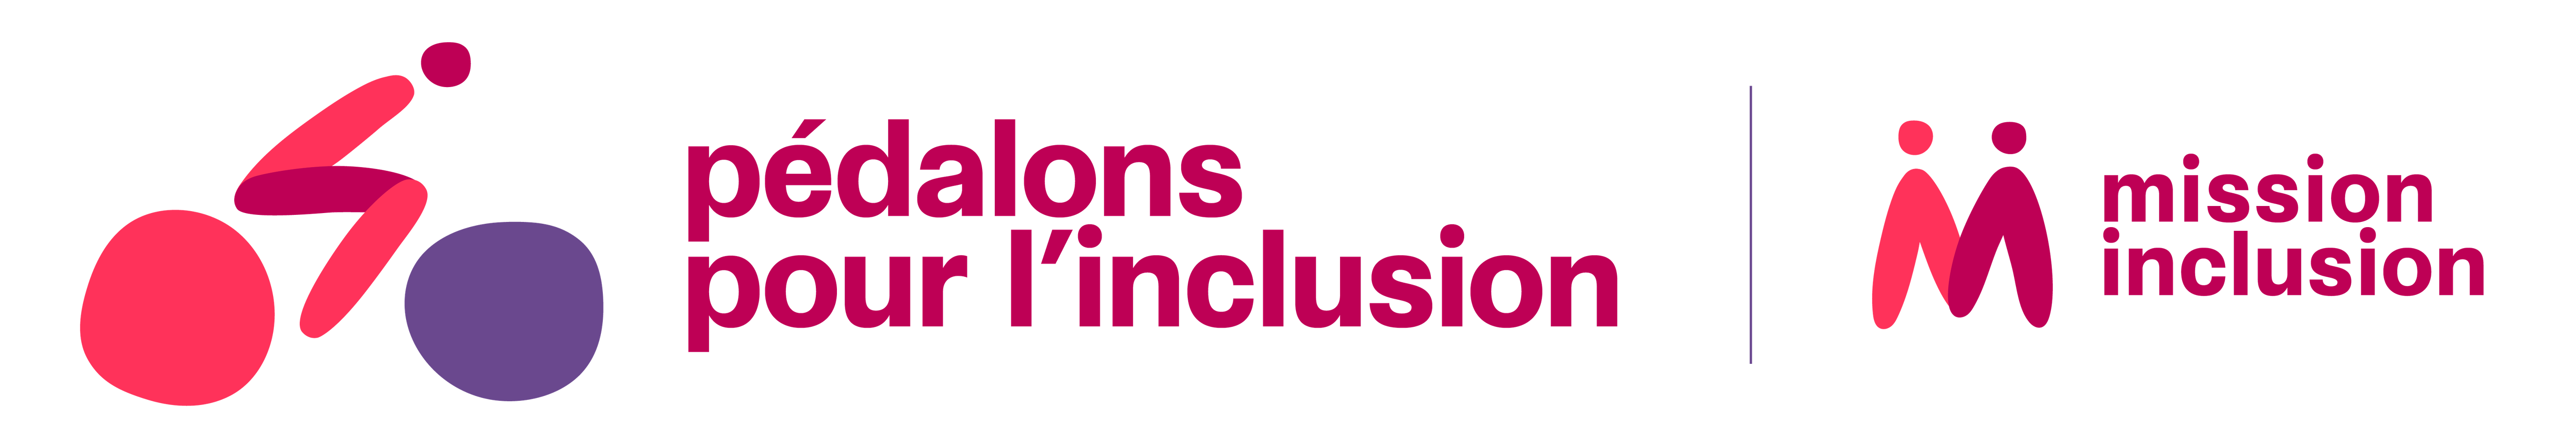 Mission inclusion Logo